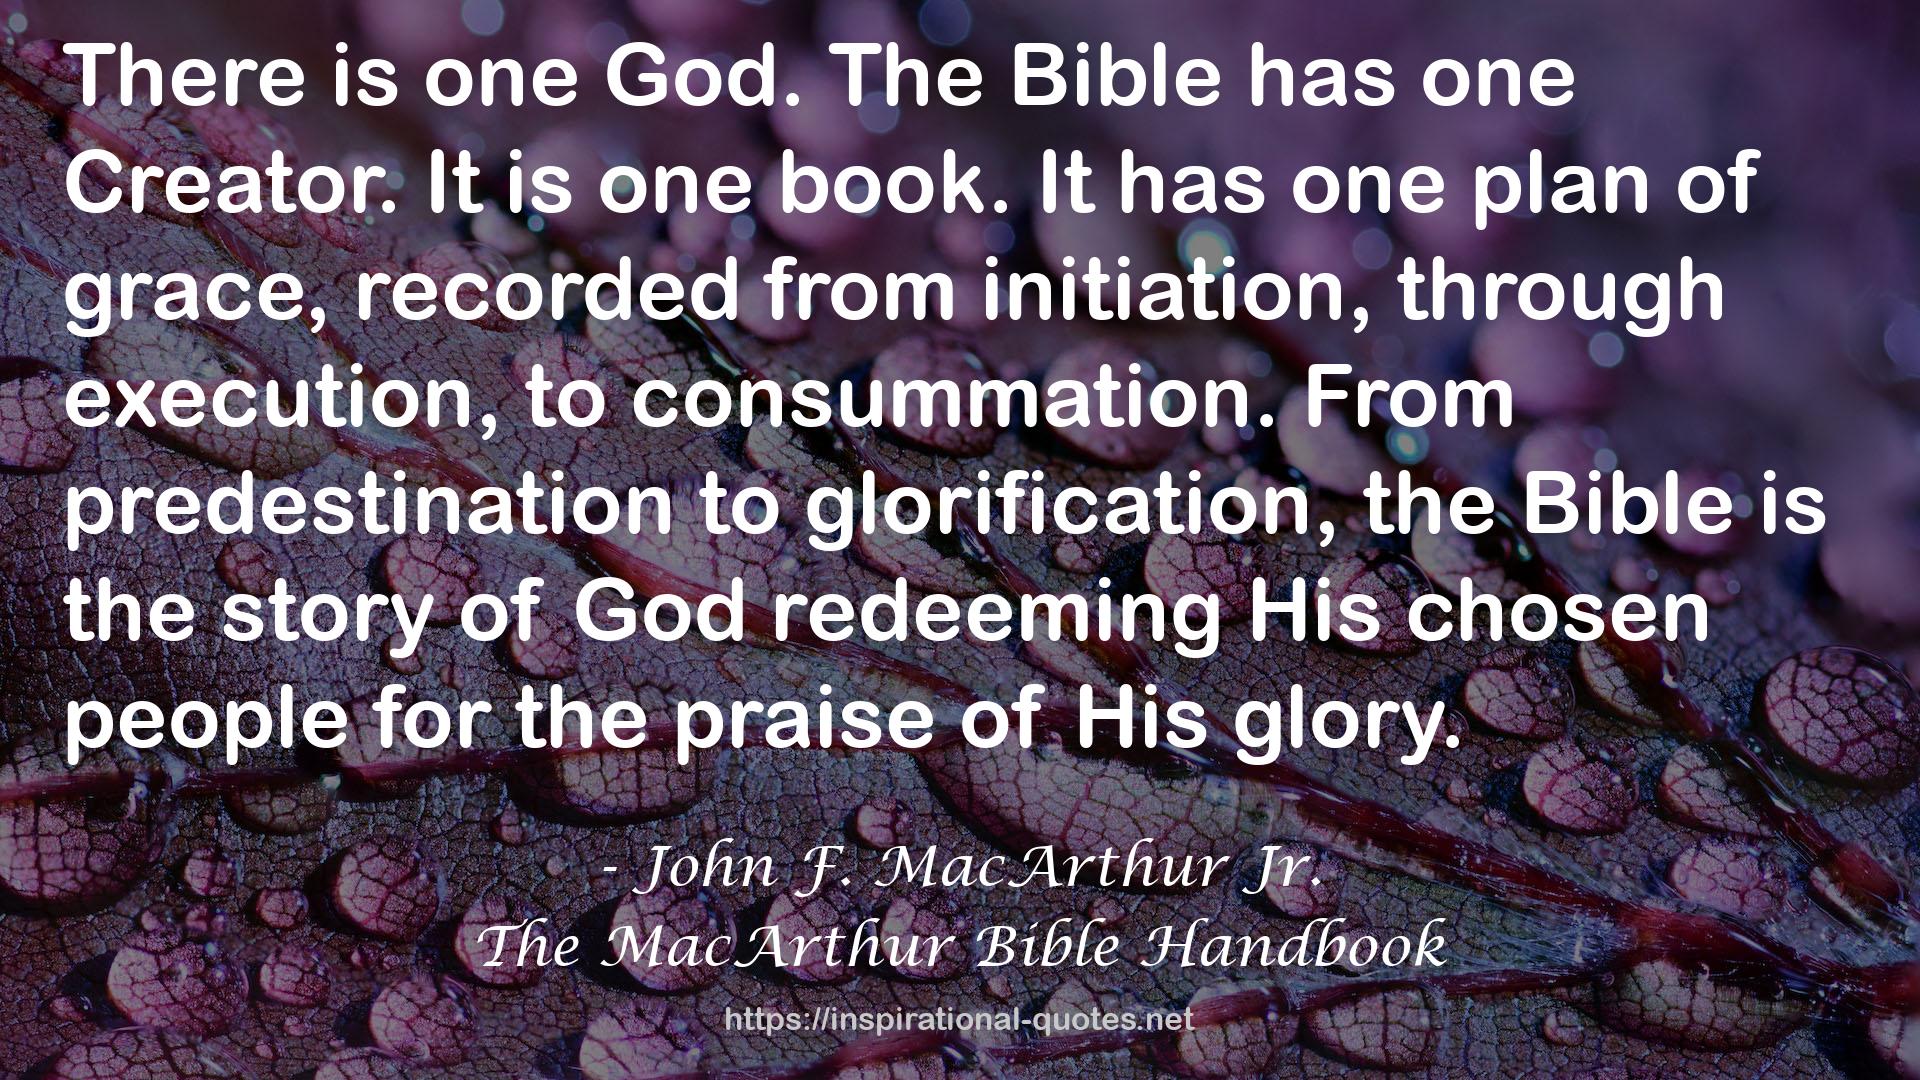 The MacArthur Bible Handbook QUOTES